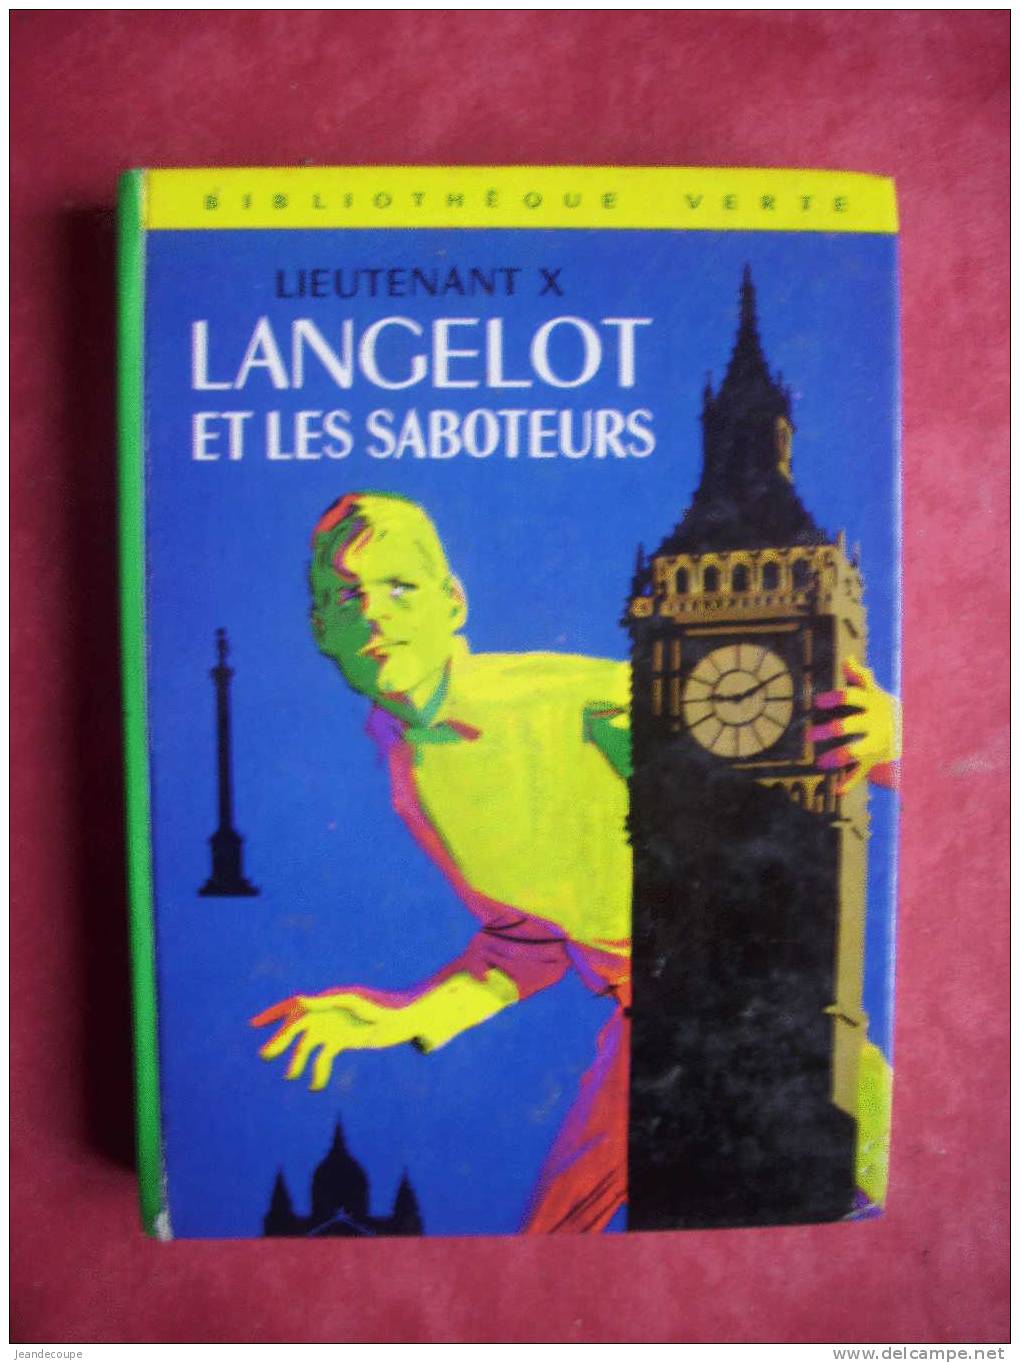 BIBLIOTHEQUE VERTE - Lieutenant X - Langelot Et Les Saboteurs - Illustration ( Maurice Paulin ) 1966 éd O - Bibliotheque Verte